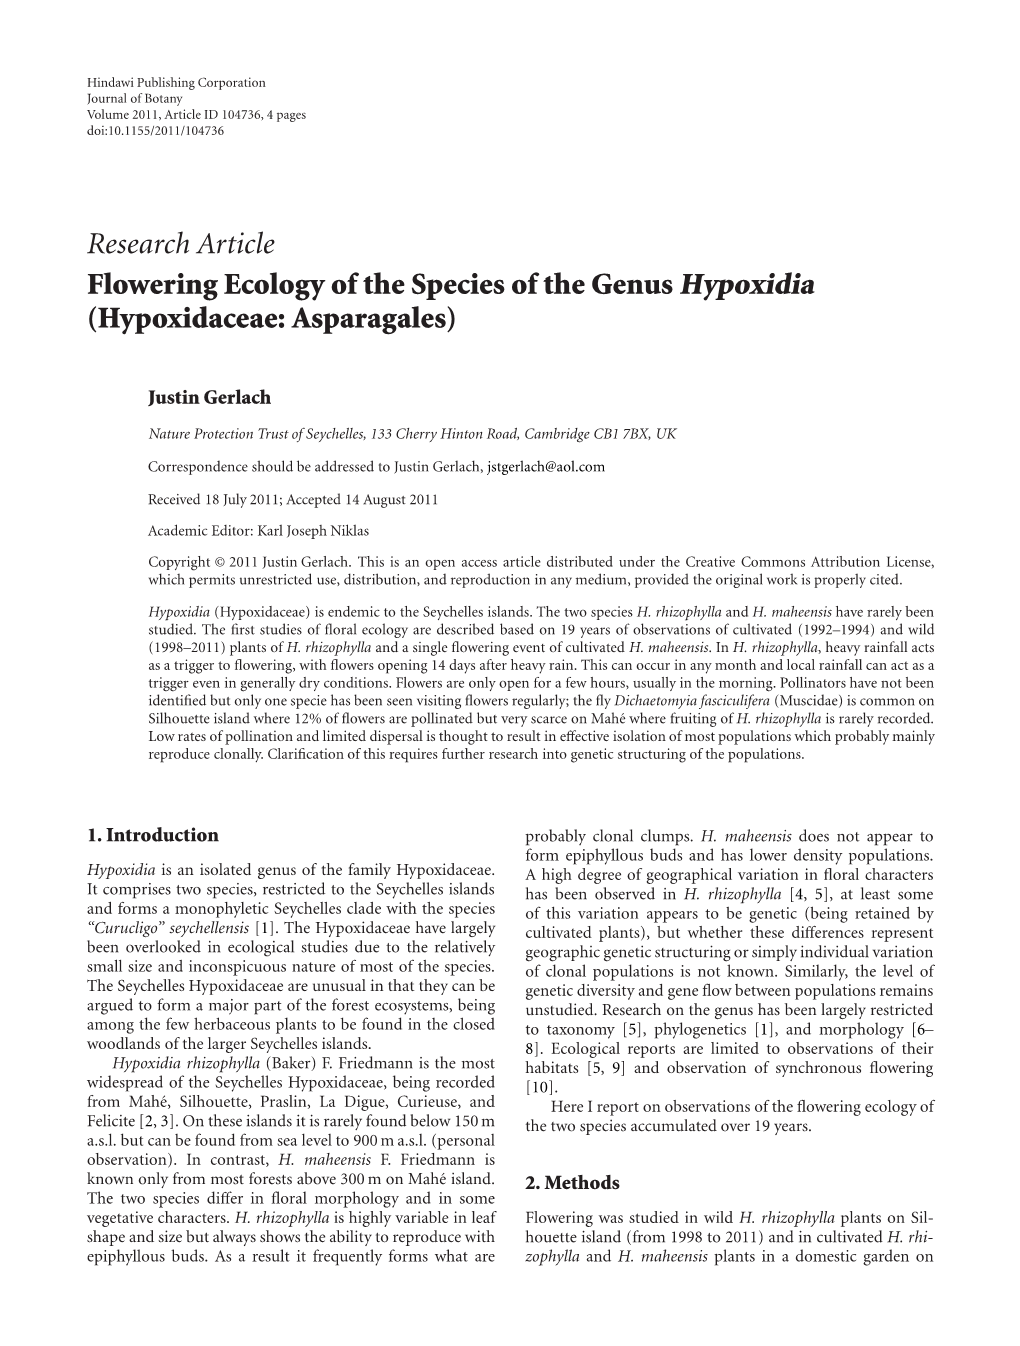 Flowering Ecology of the Species of the Genus Hypoxidia (Hypoxidaceae: Asparagales)